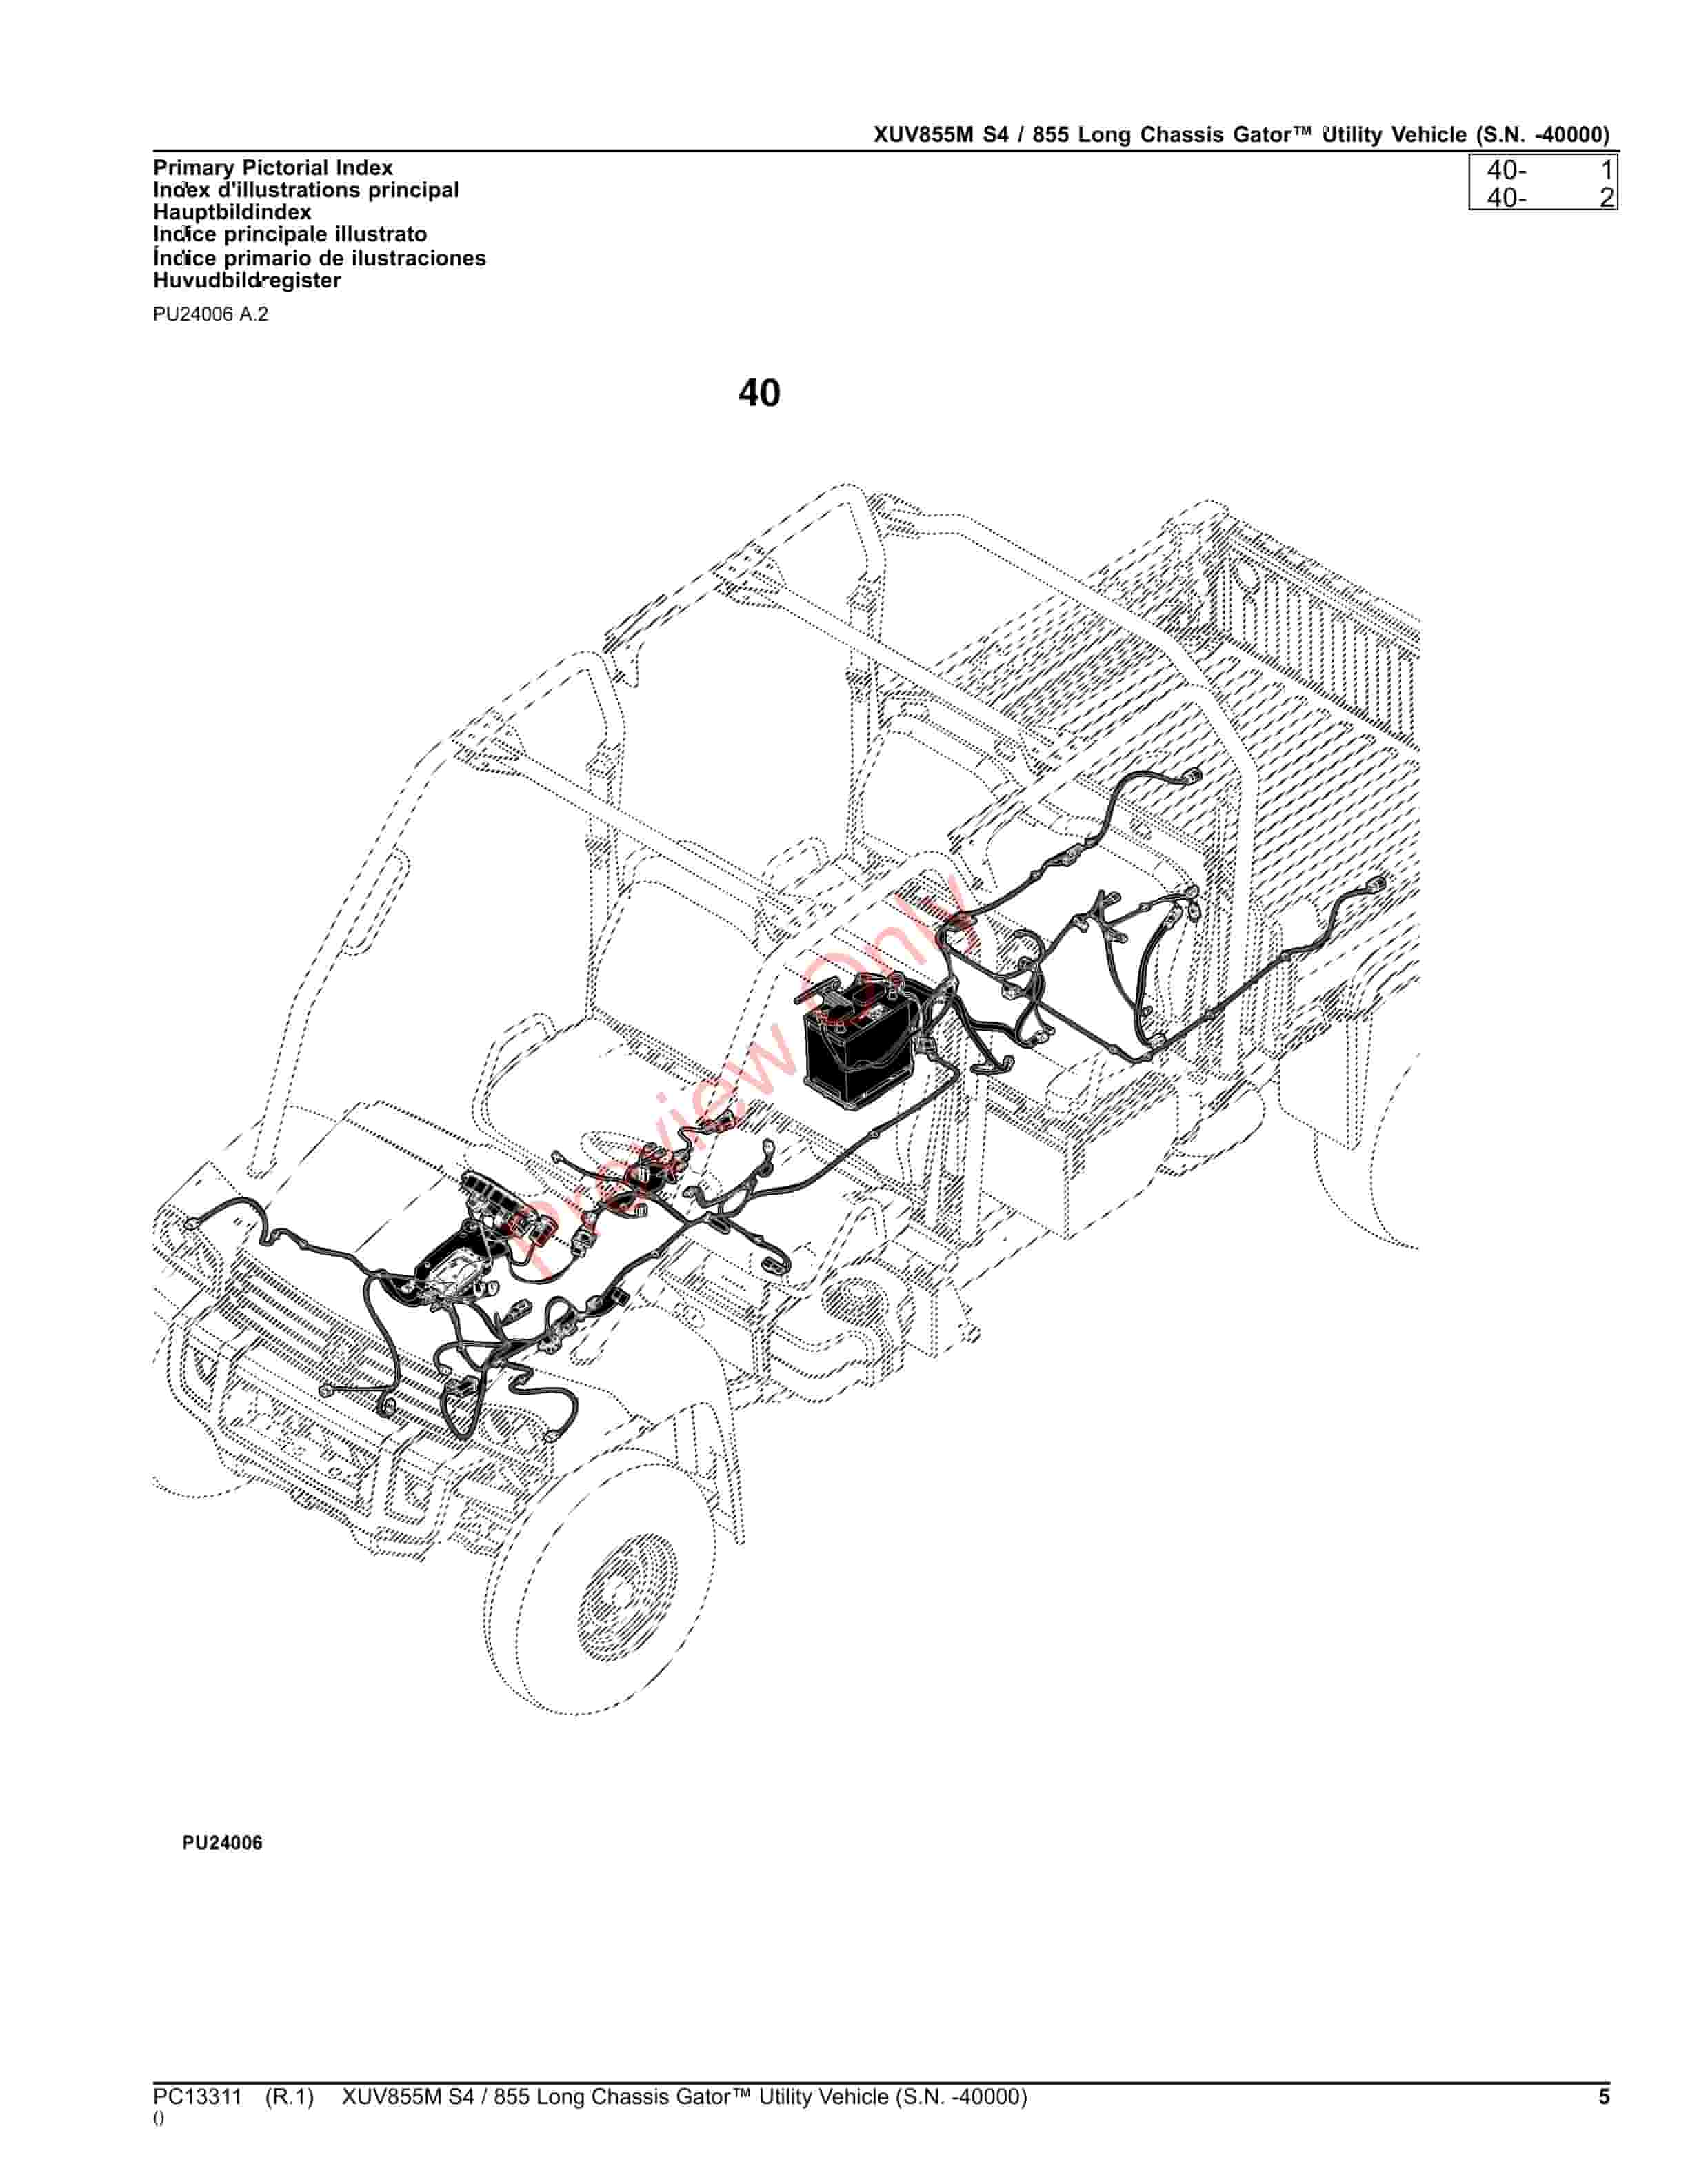 John Deere XUV855M S4 855 Long Chassis Gator Utility Vehicle (S.N. Parts Catalog PC13311 10SEP23-5